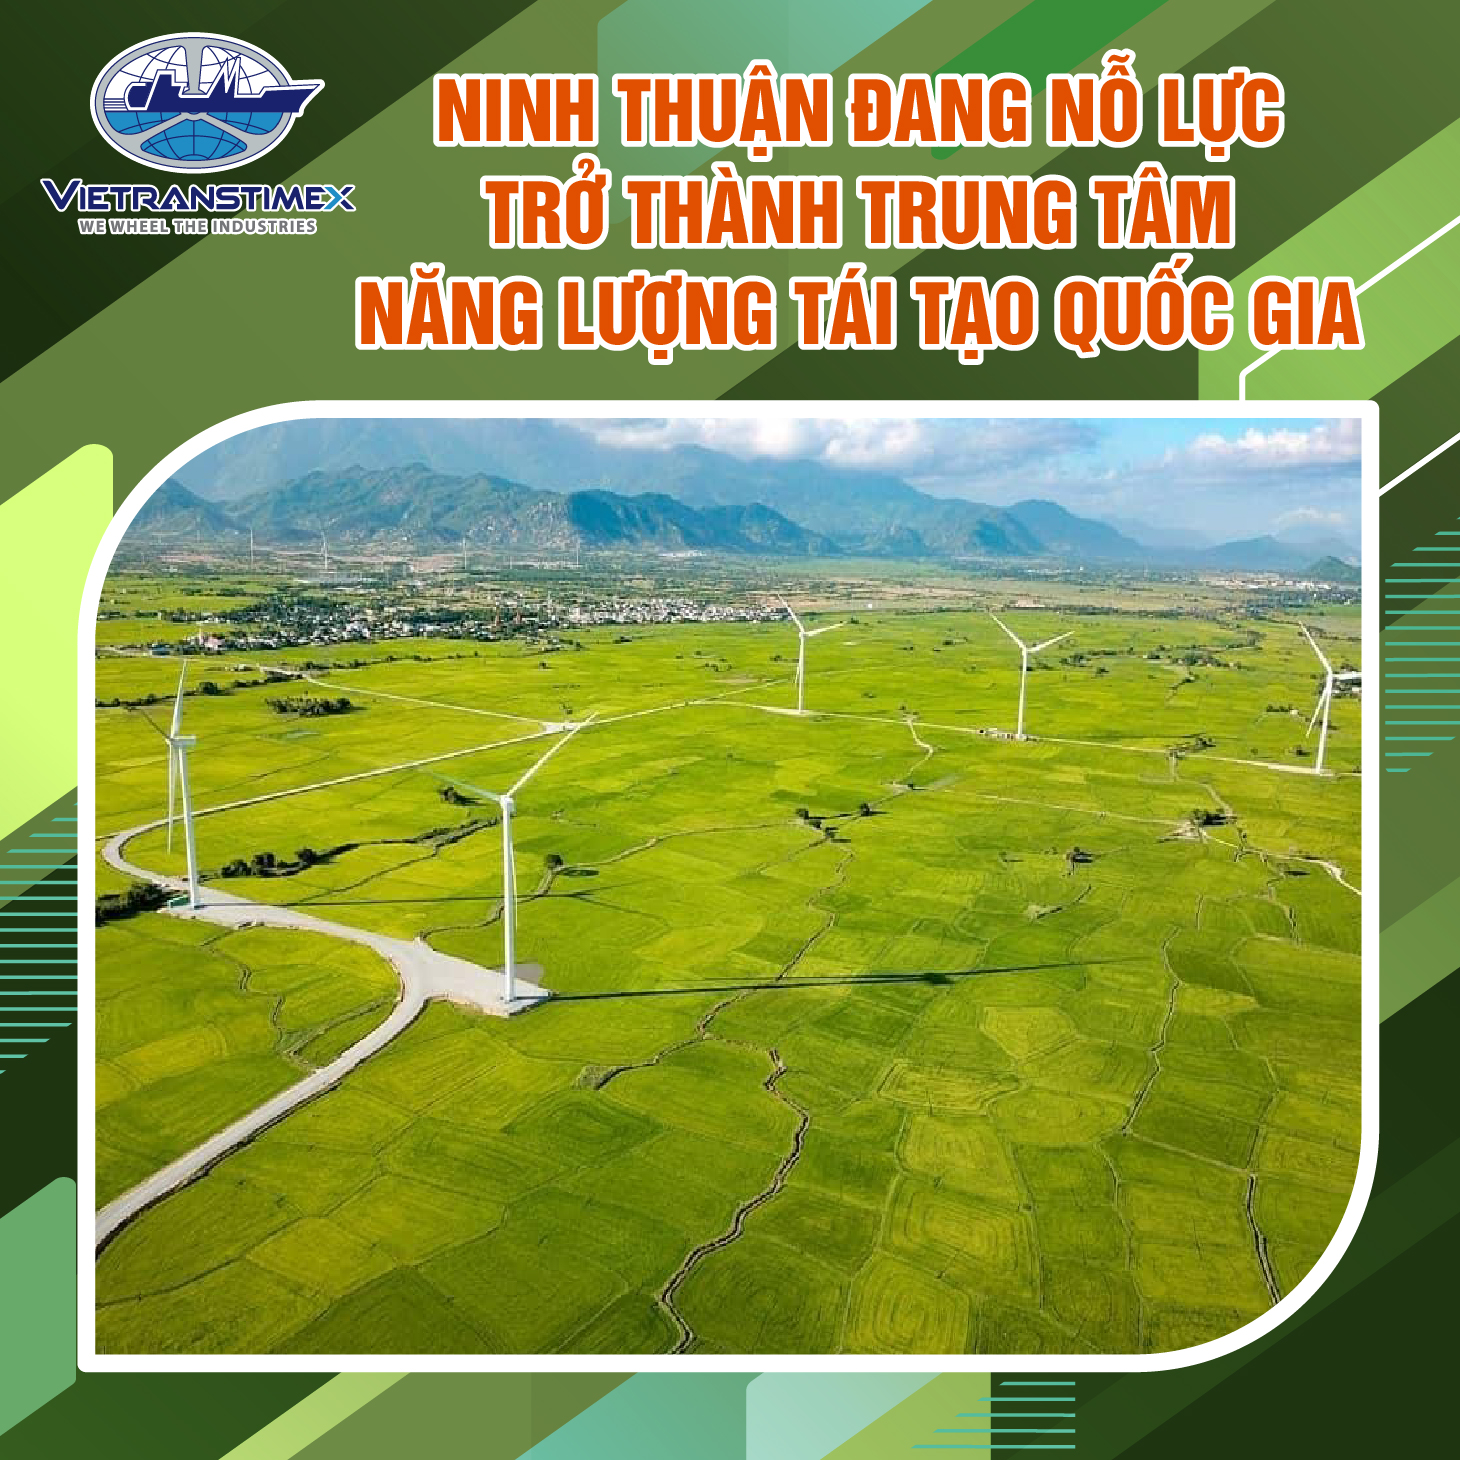 Ninh Thuan Working To Establish Itself As National Renewable Energy Centre